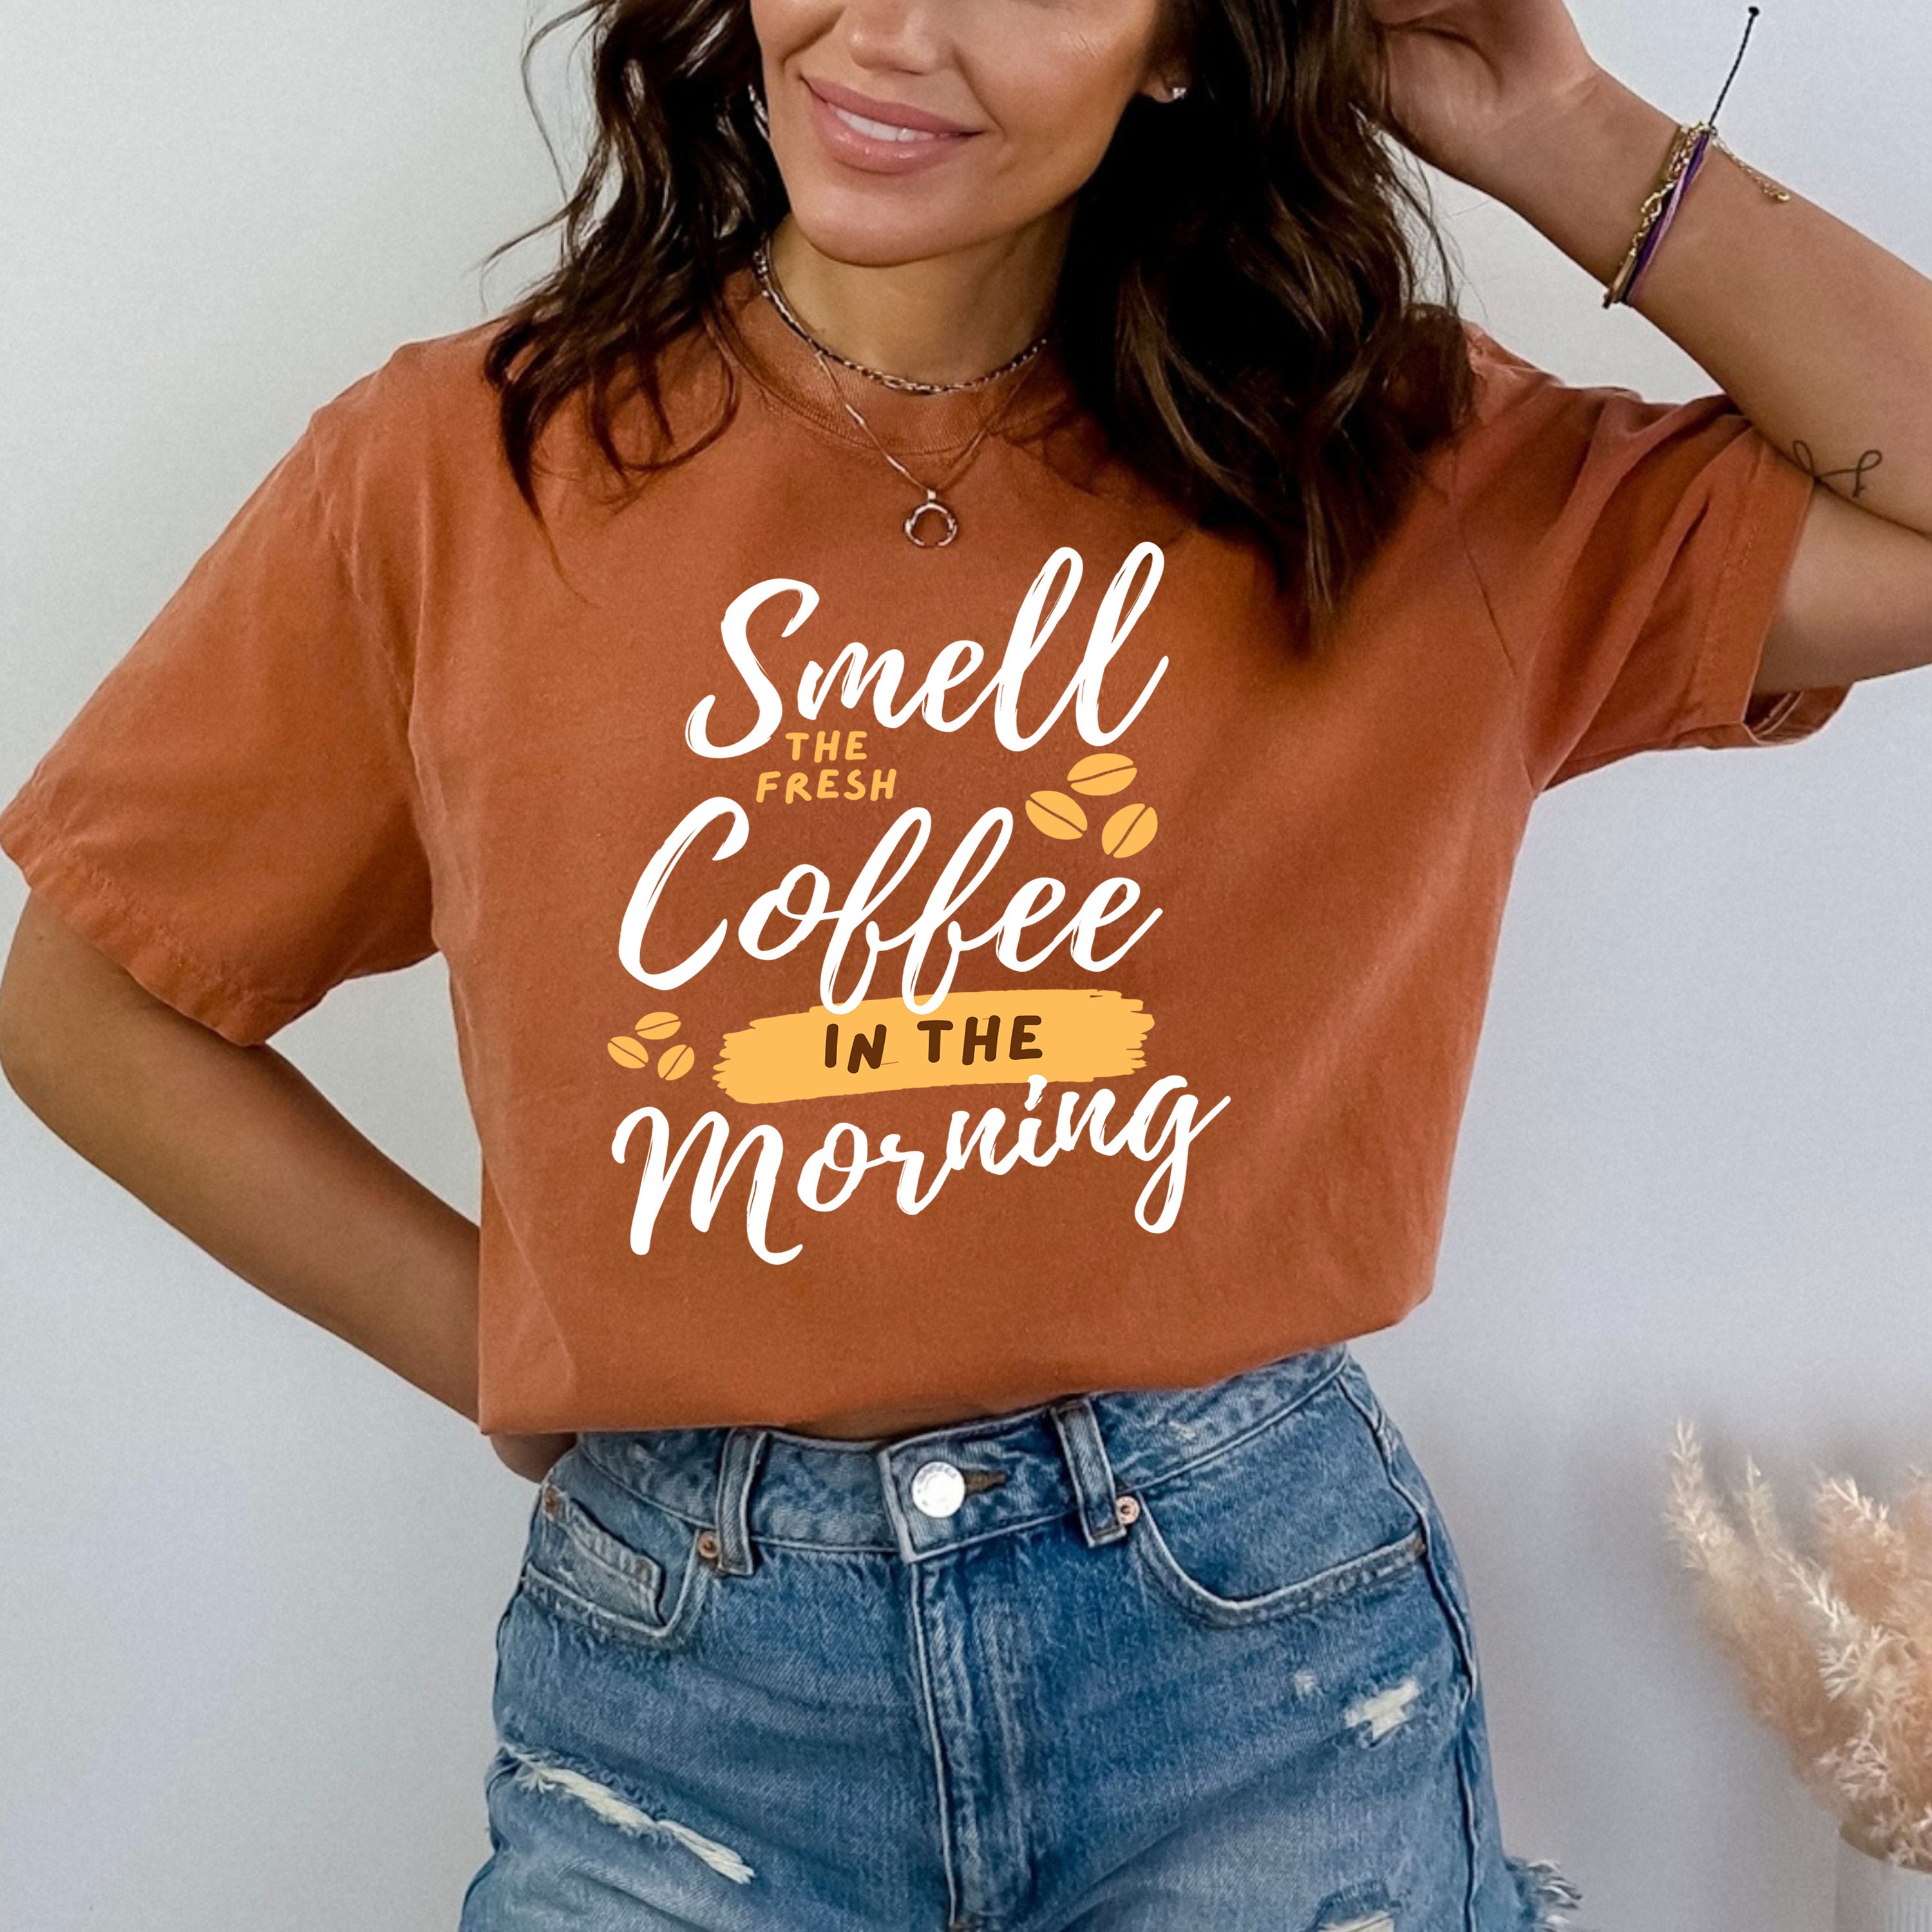 Smell The Fresh Coffee - Bella canvas